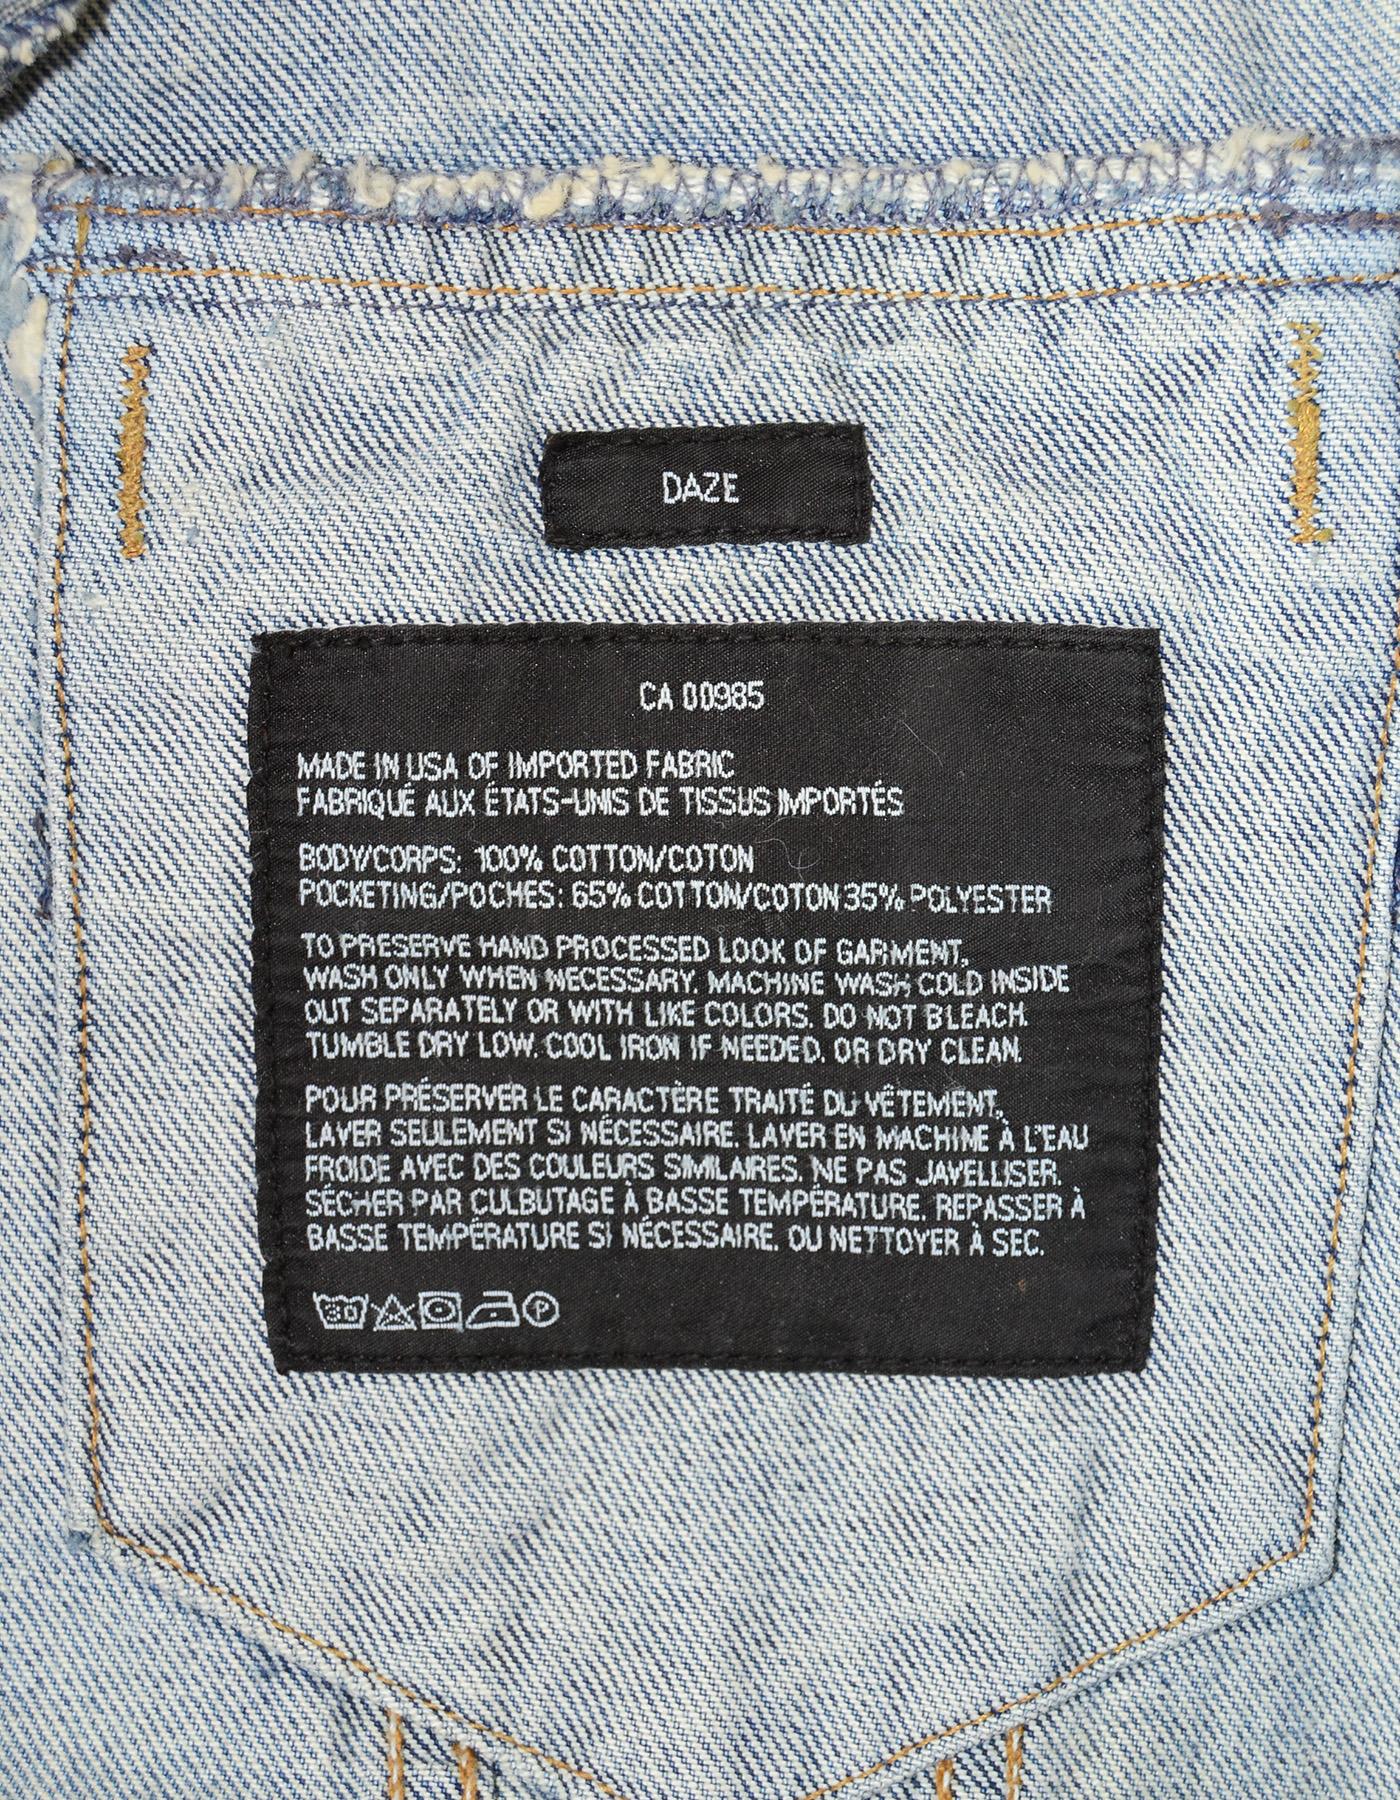 Women's or Men's Alexander Wang Blue Daze Oversized Denim Jean Jacket sz S rt. $450